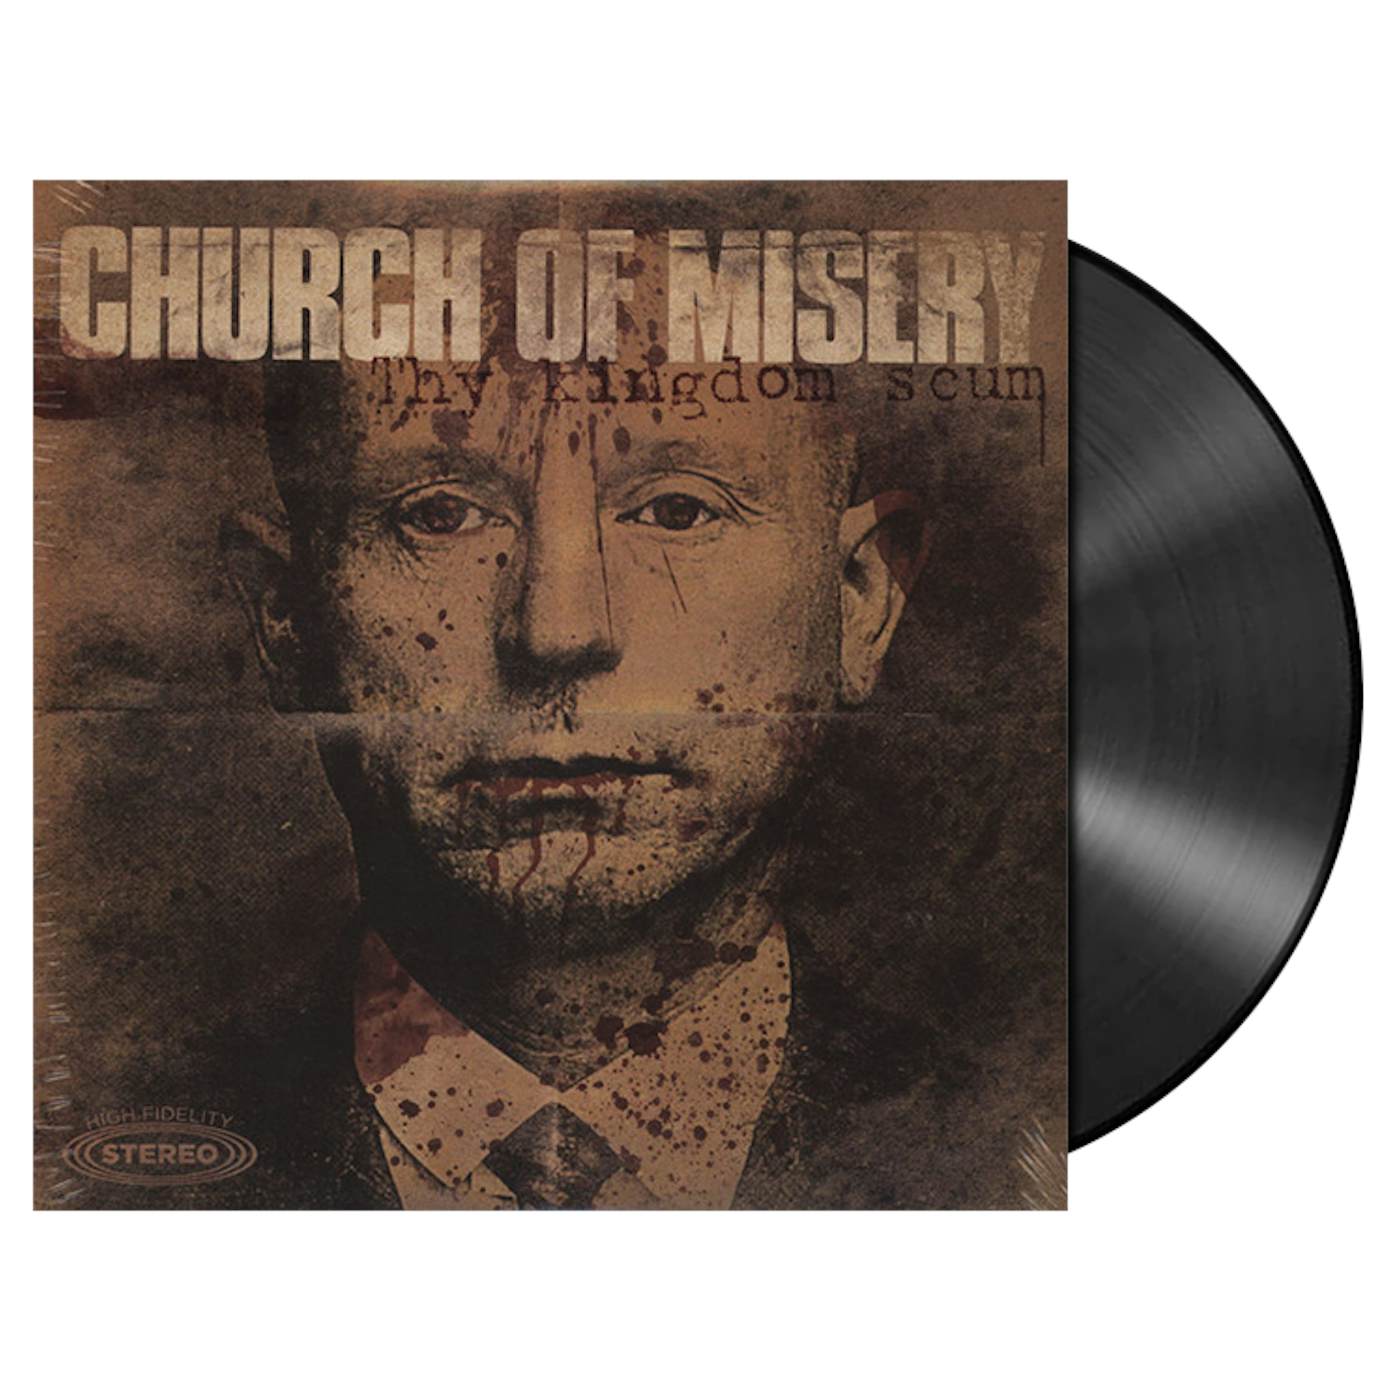 CHURCH OF MISERY - 'Thy Kingdom Scum' 2xLP (Vinyl)